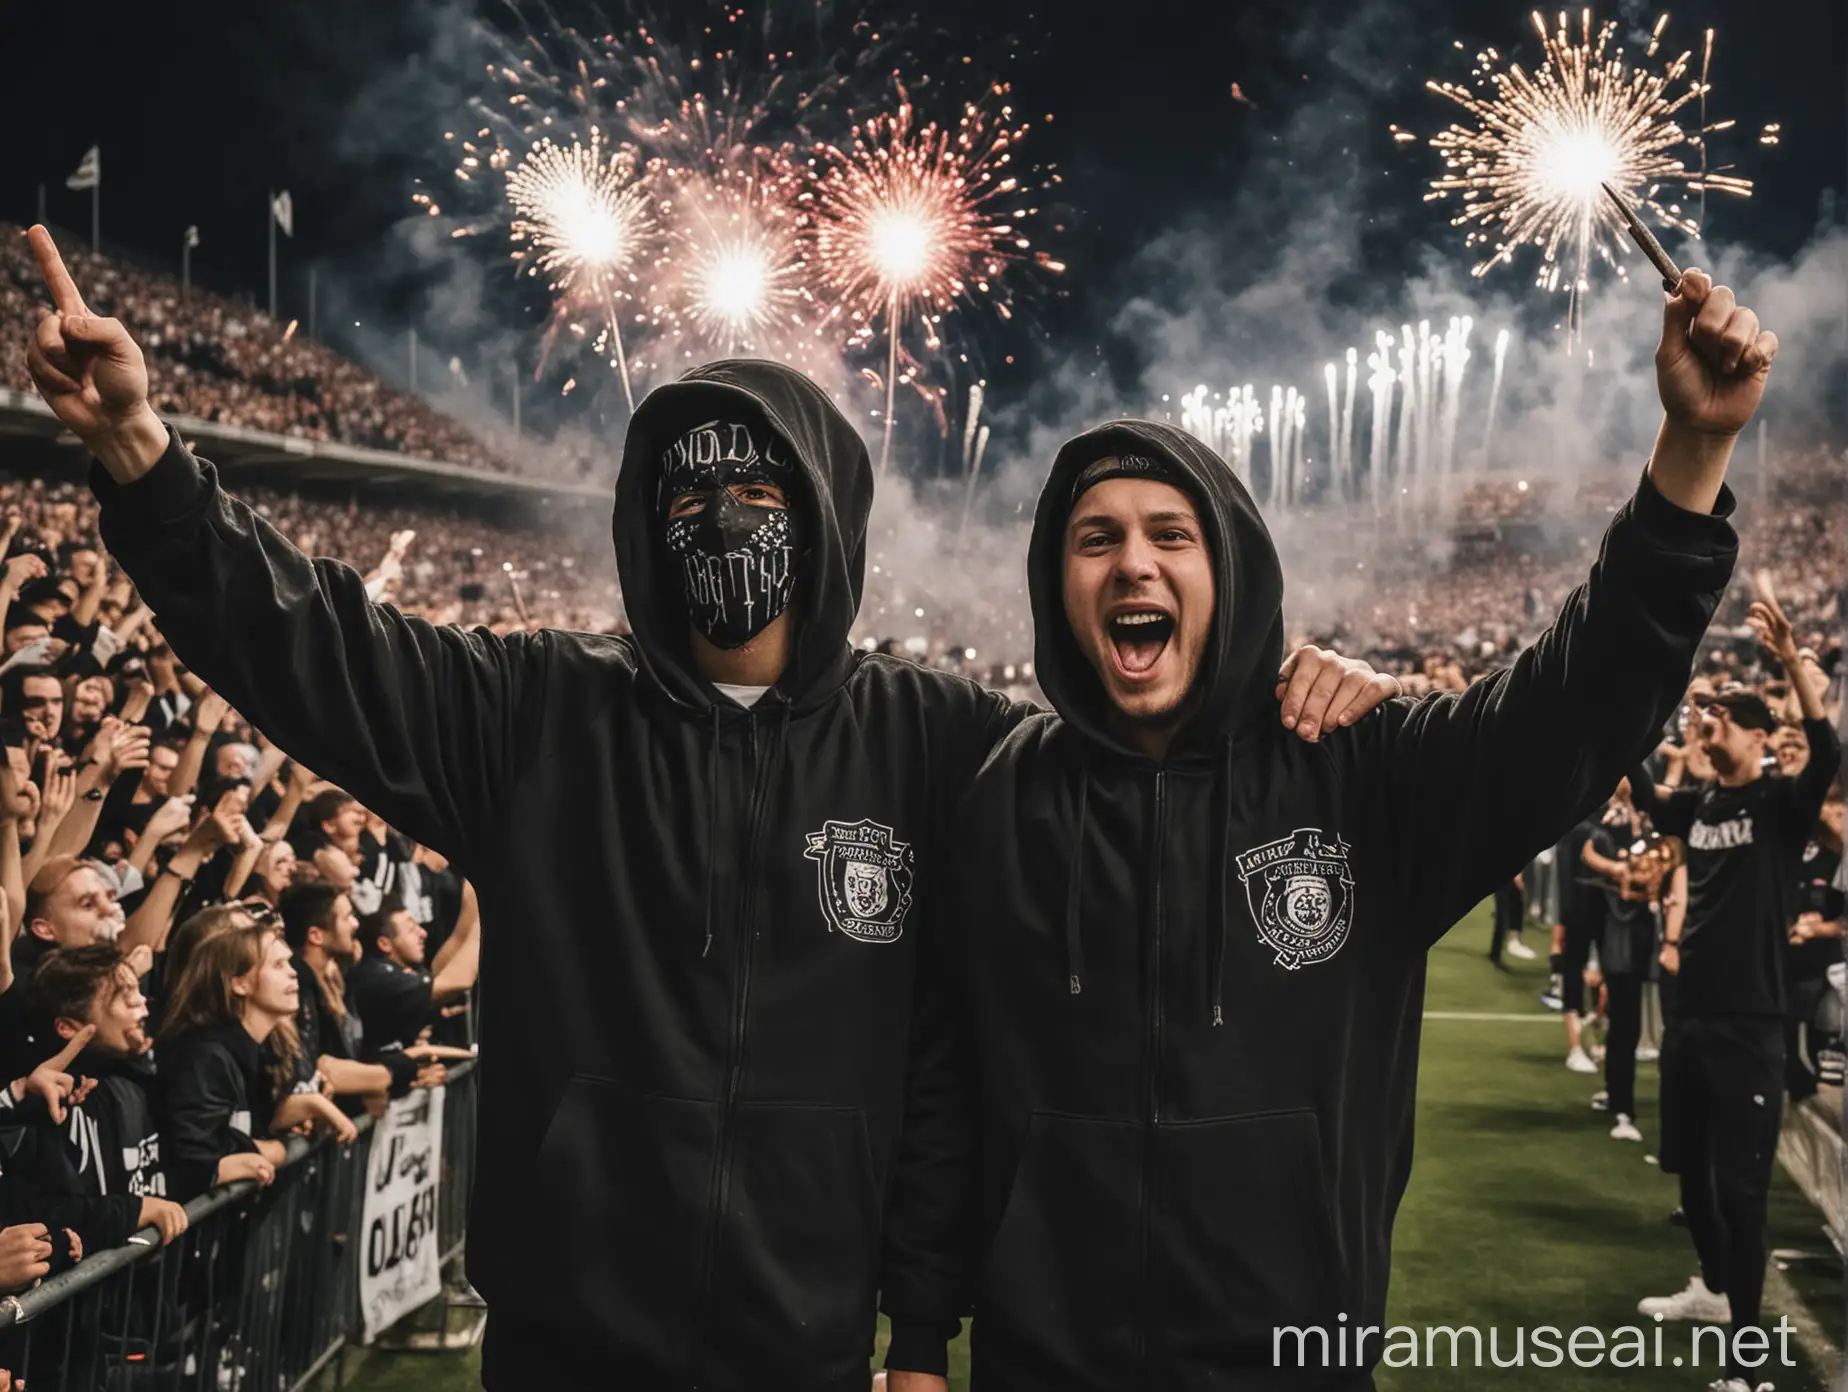 Hooligan Fans Igniting Fireworks in Football Stadium